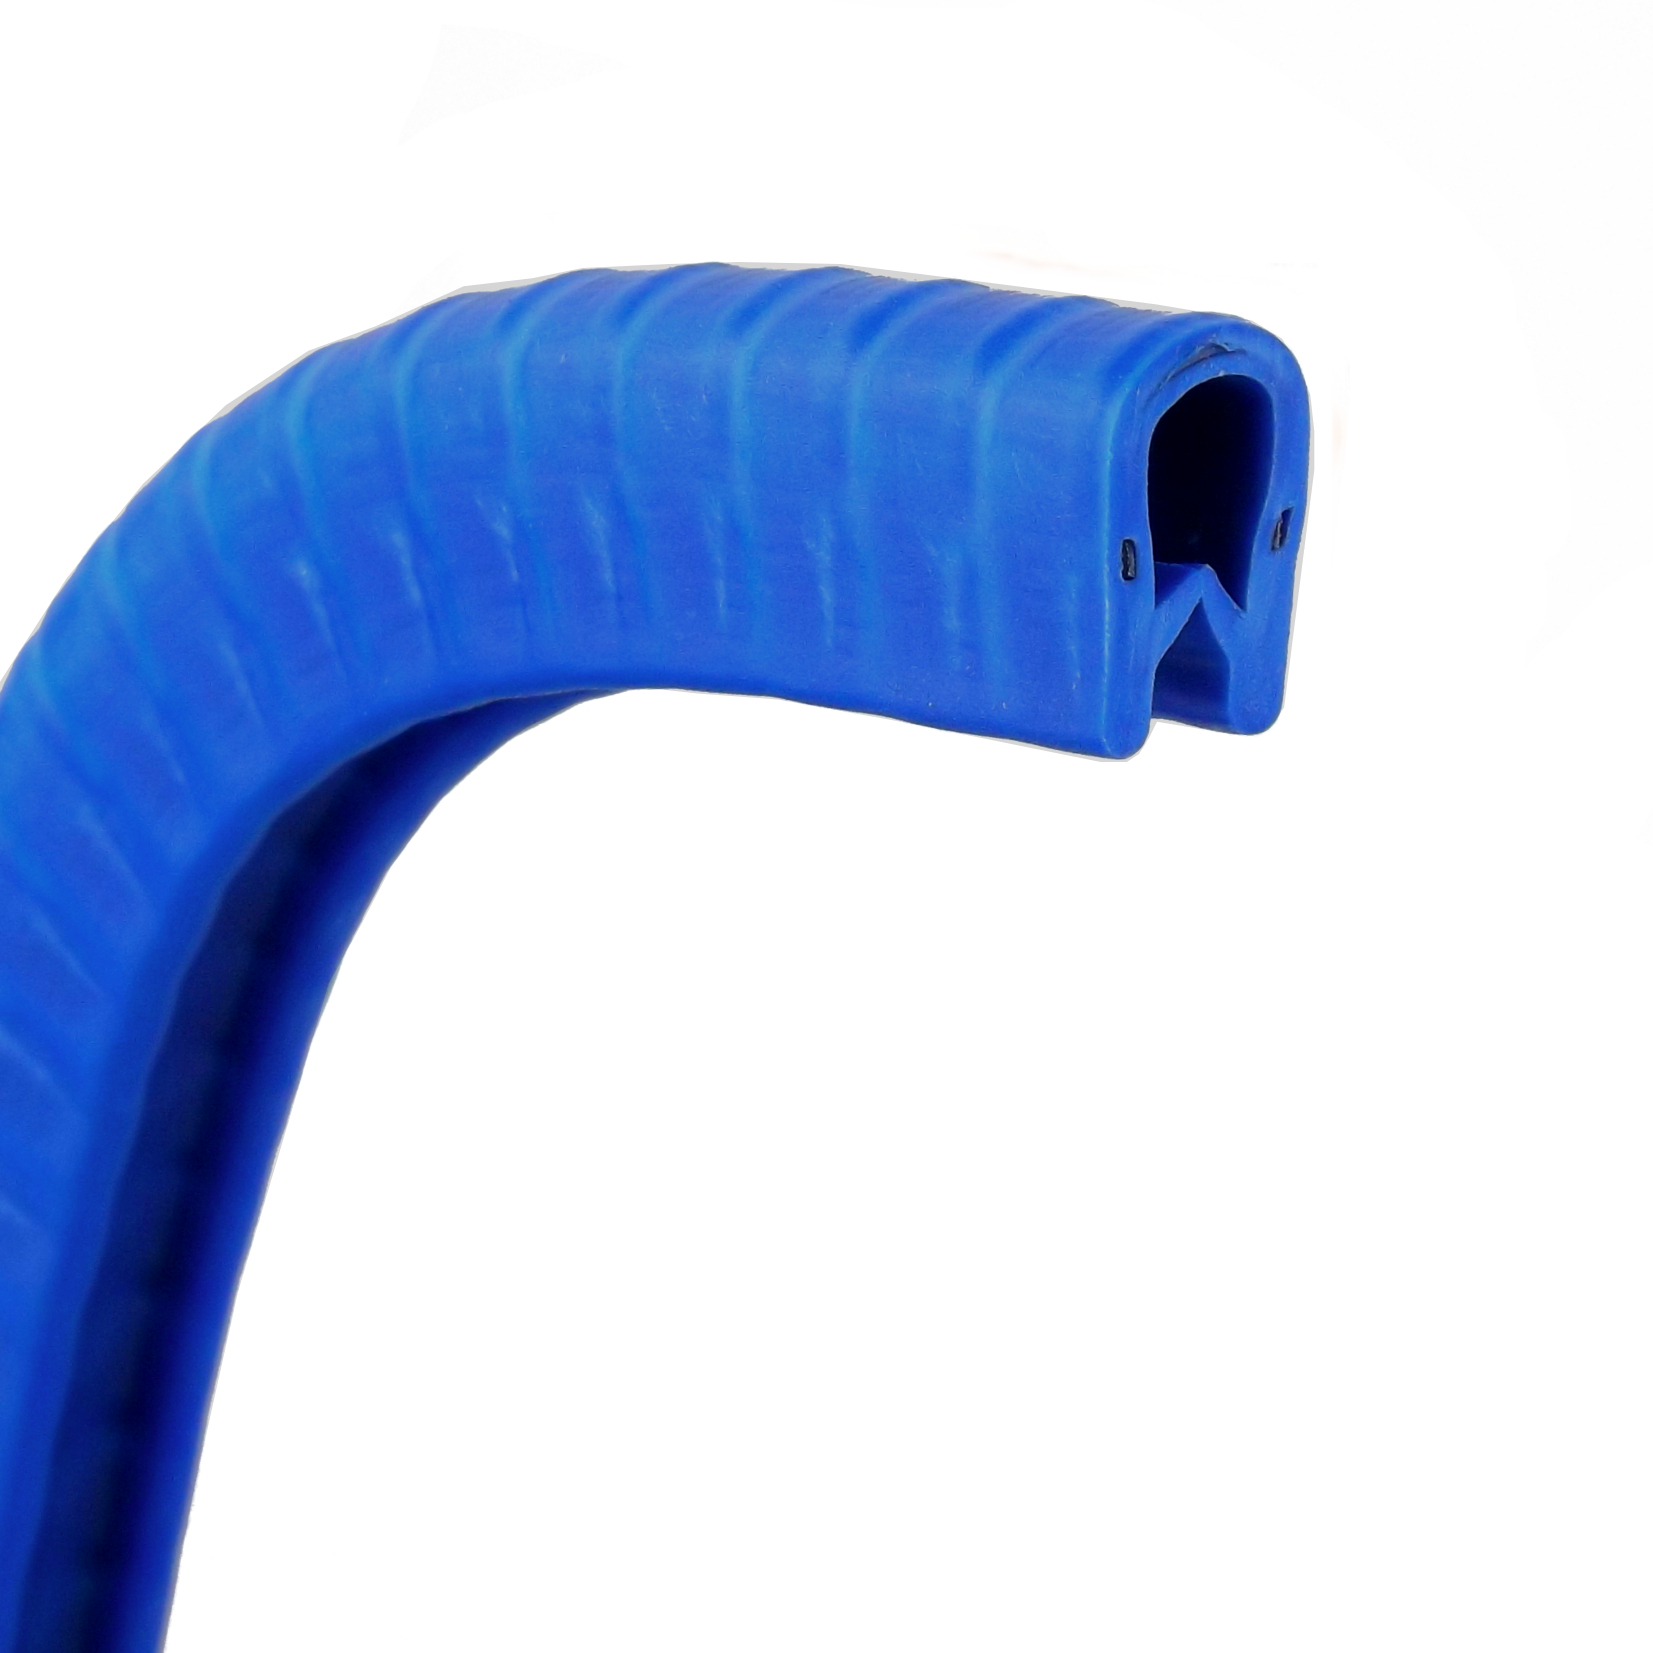 Flexible Edge Trim Finisher Strip in Blue